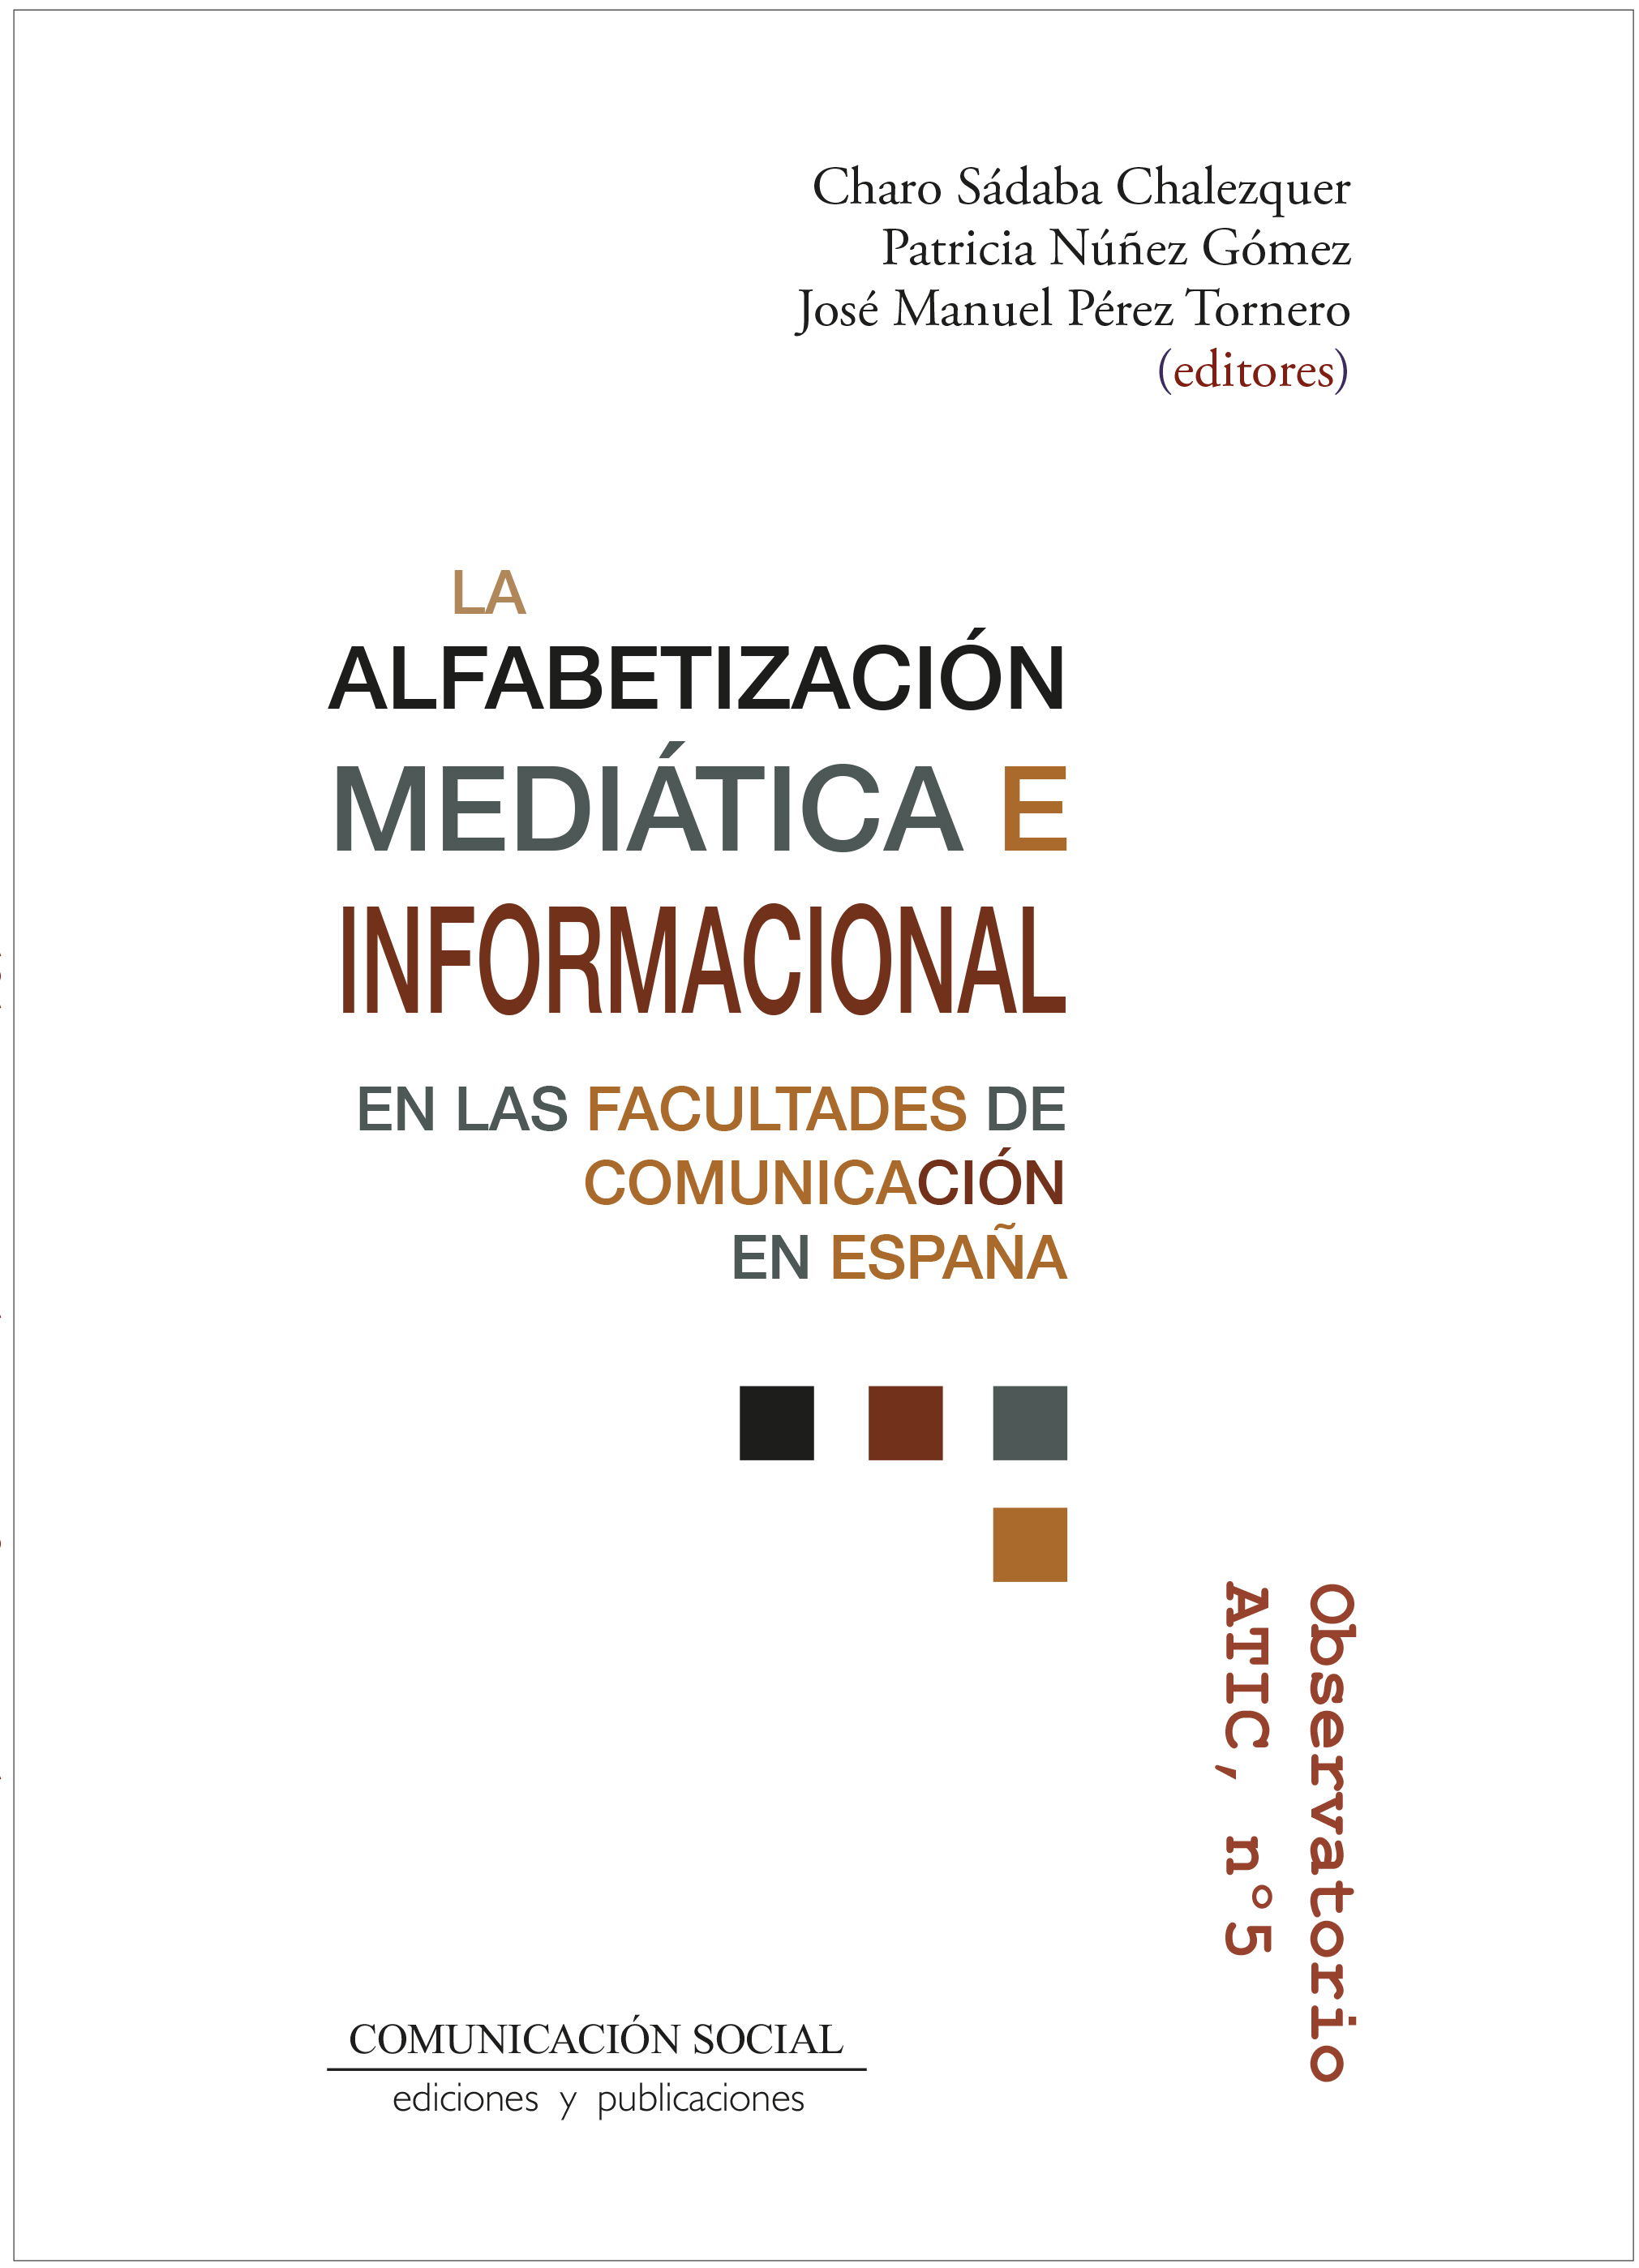 					Ver Núm. 9 (2022): La alfabetización mediática e informacional en las Facultades de Comunicación de España (2022, ISBN:978-84-17600-62-4)
				